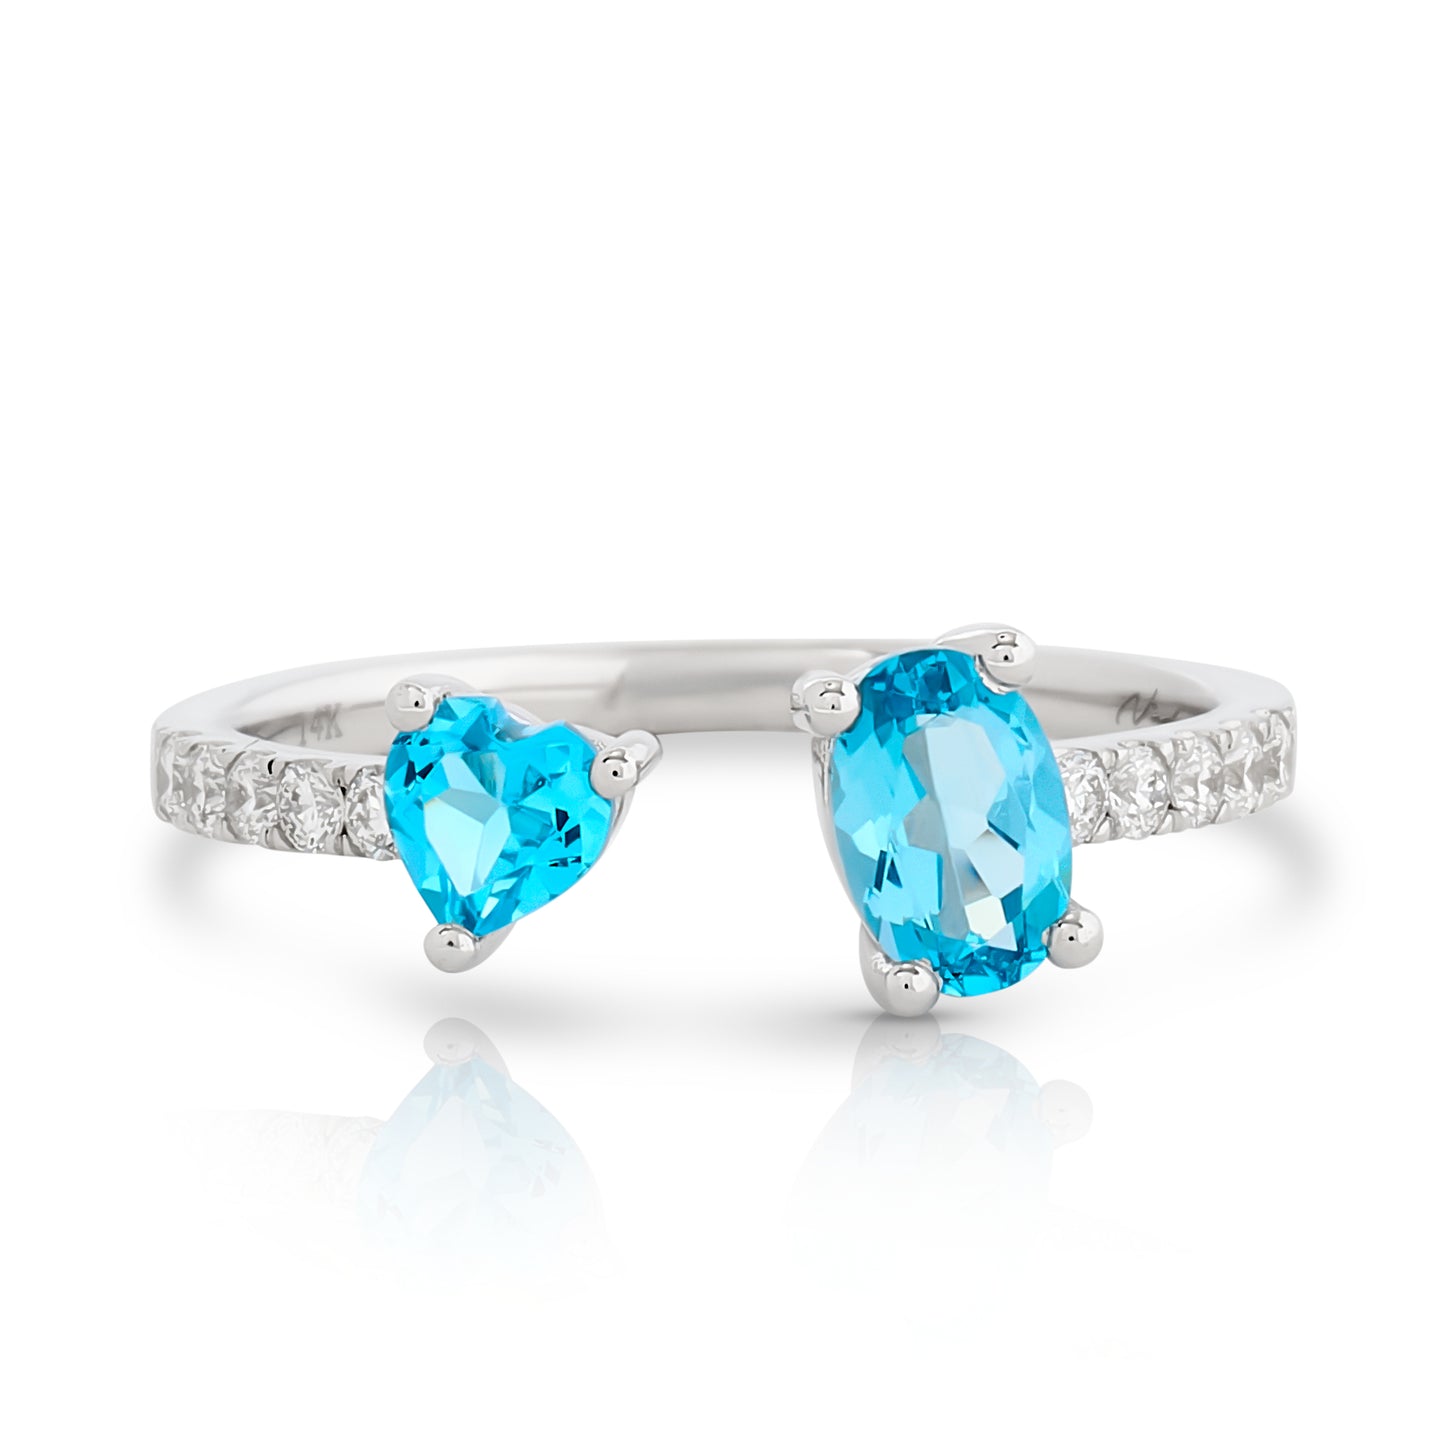 Blue Topaz and Diamond U Shape Ring